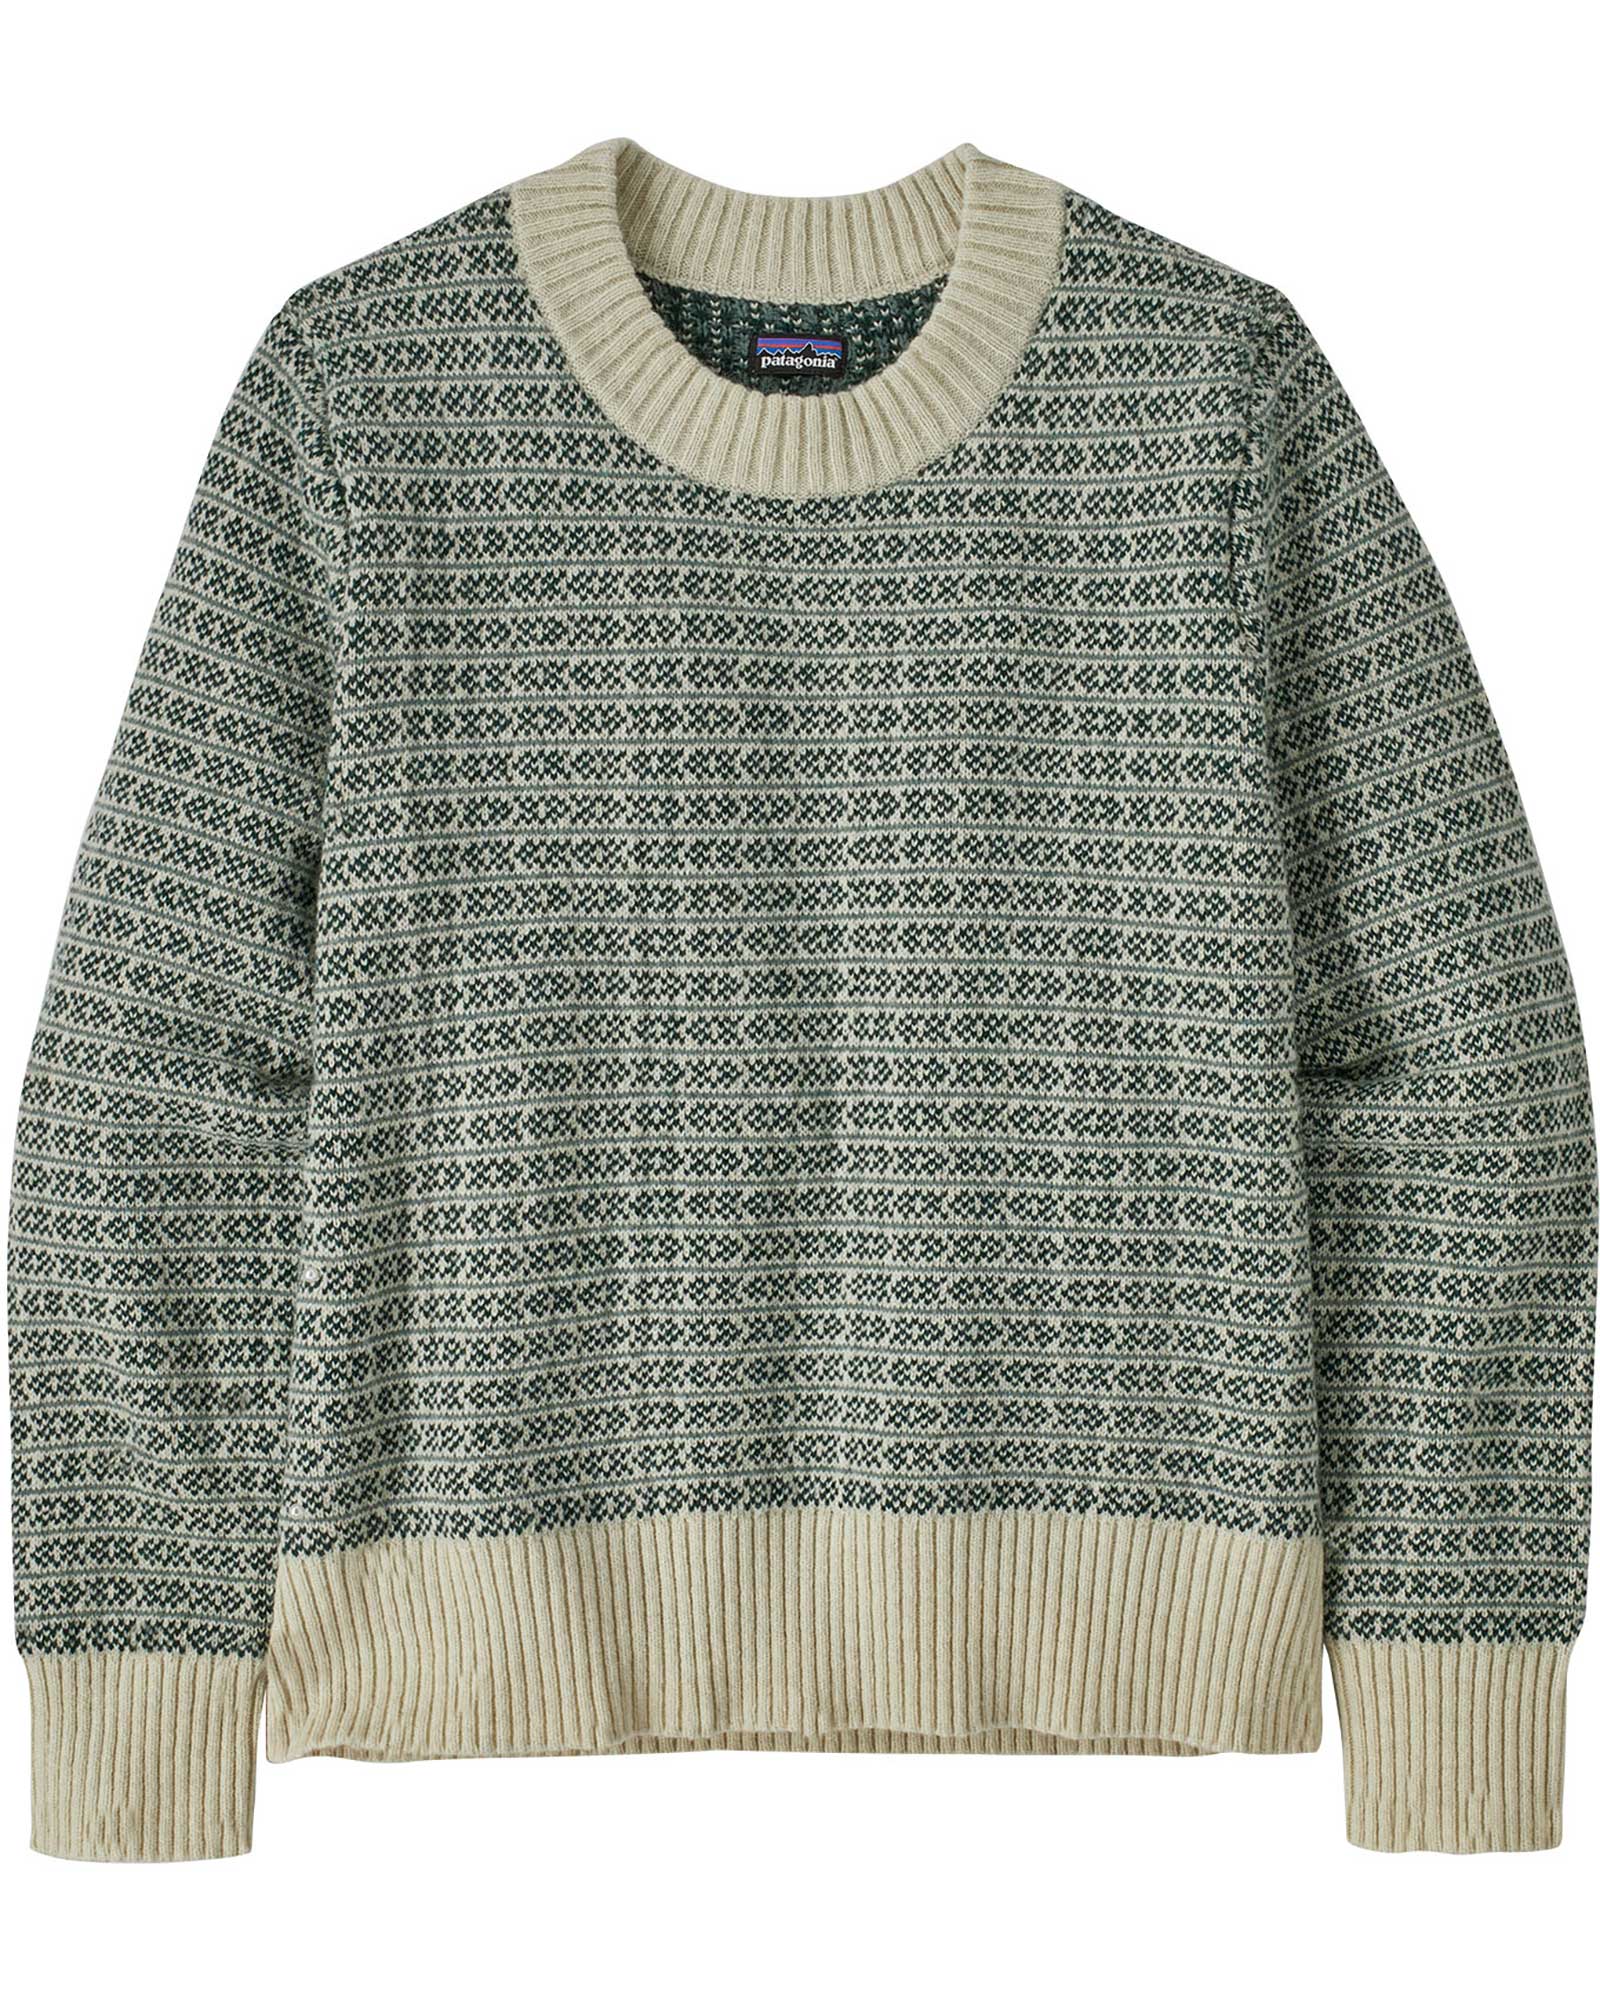 Patagonia Recycled Wool  Crewneck Sweater - Natural/Sapling S